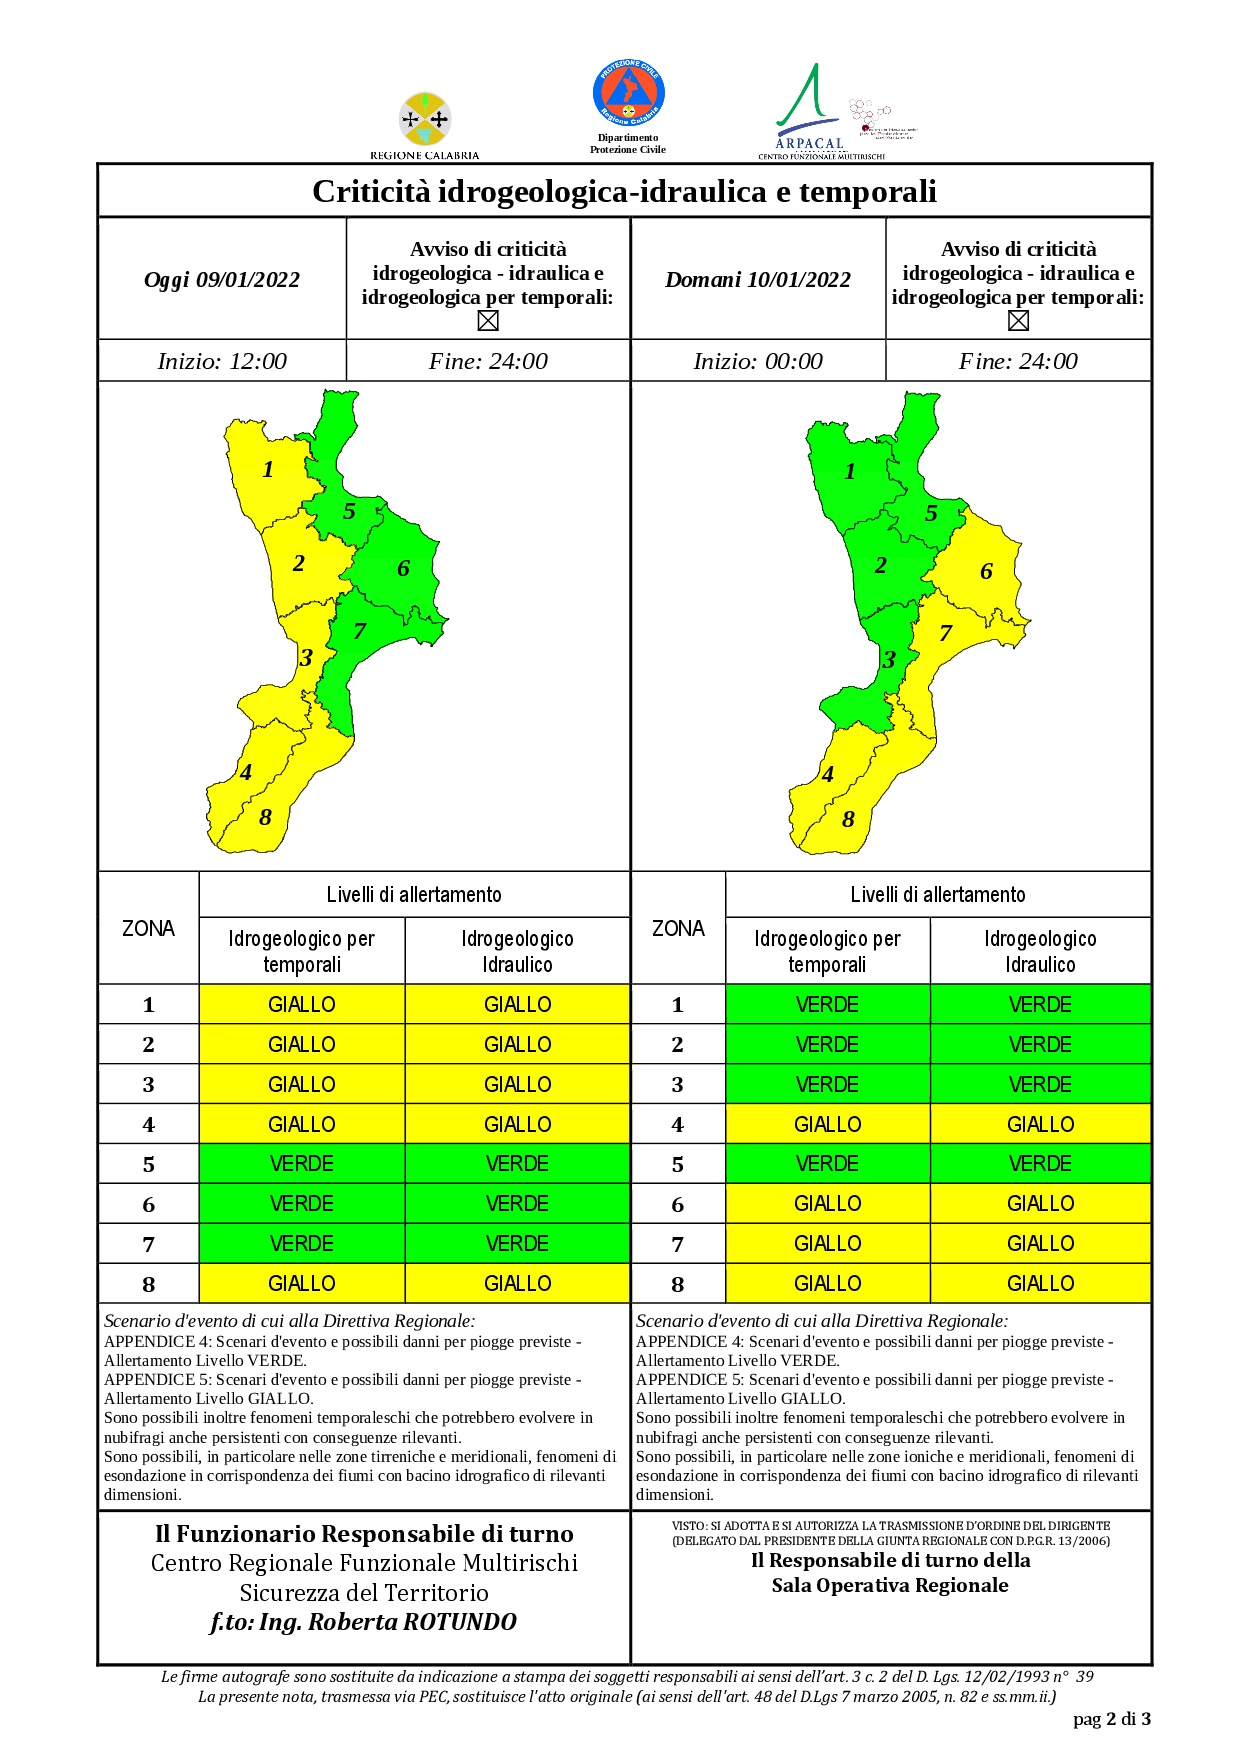 Criticità idrogeologica-idraulica e temporali in Calabria 09-01-2022